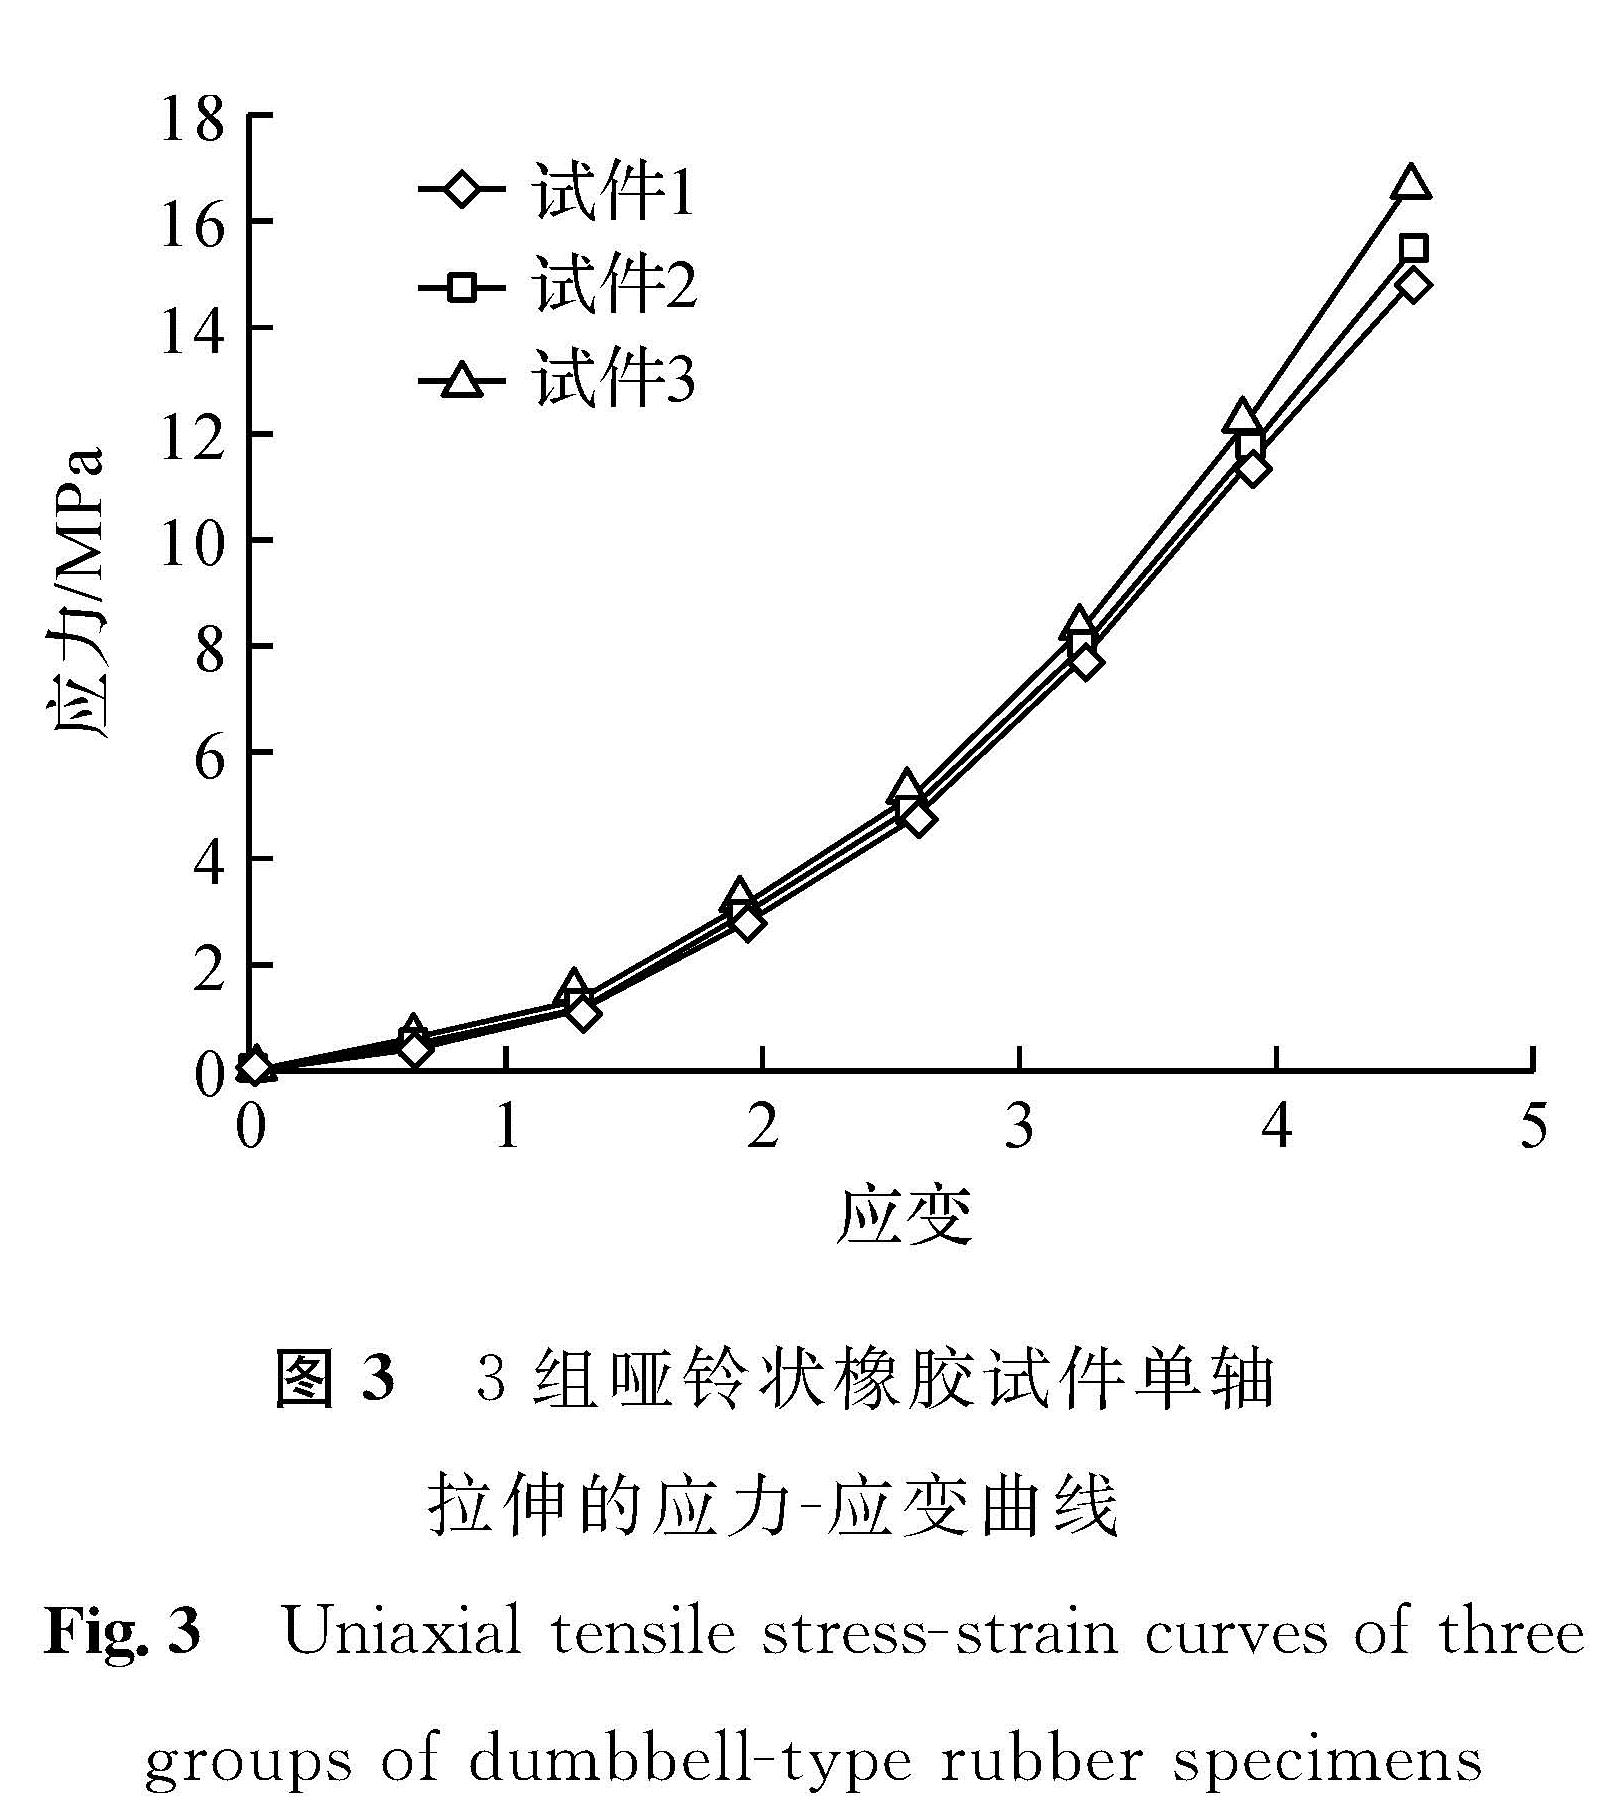 图3 3组哑铃状橡胶试件单轴拉伸的应力-应变曲线<br/>Fig.3 Uniaxial tensile stress-strain curves of three groups of dumbbell-type rubber specimens